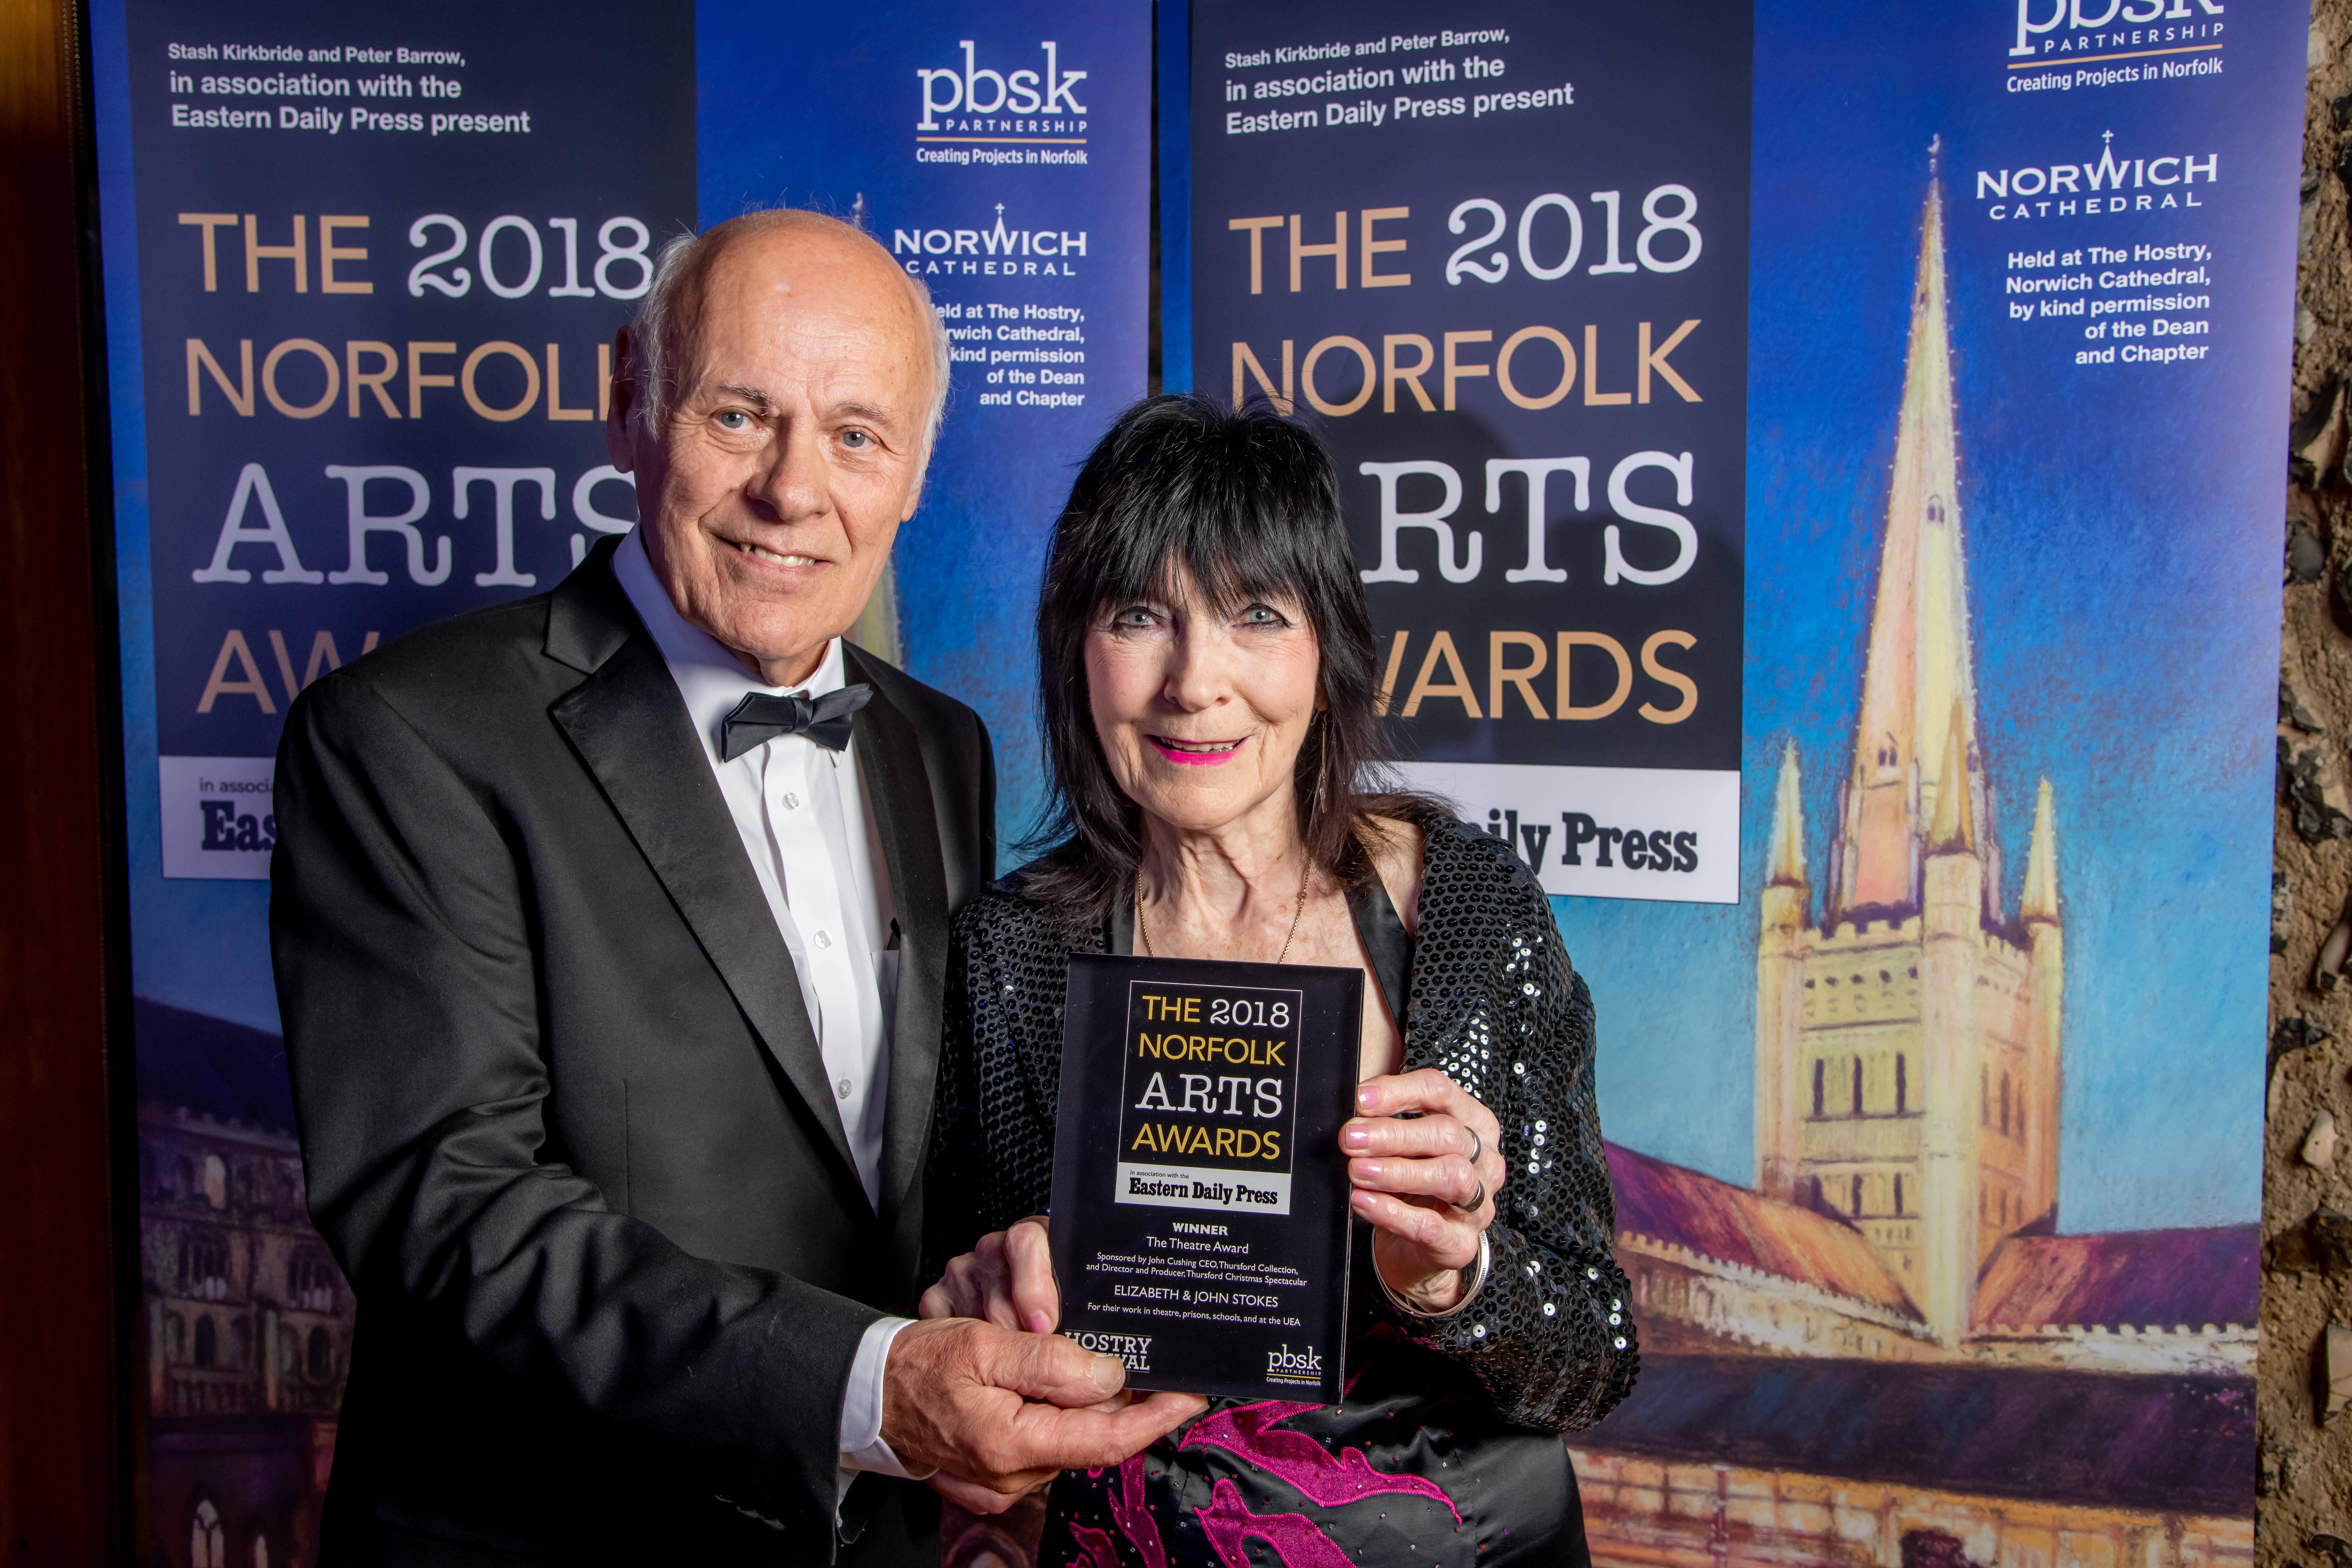 Norfolk Arts Awards 2018 at The Hostry at Norwich Cathedral. Photo credit ©Simon Finlay Photography.